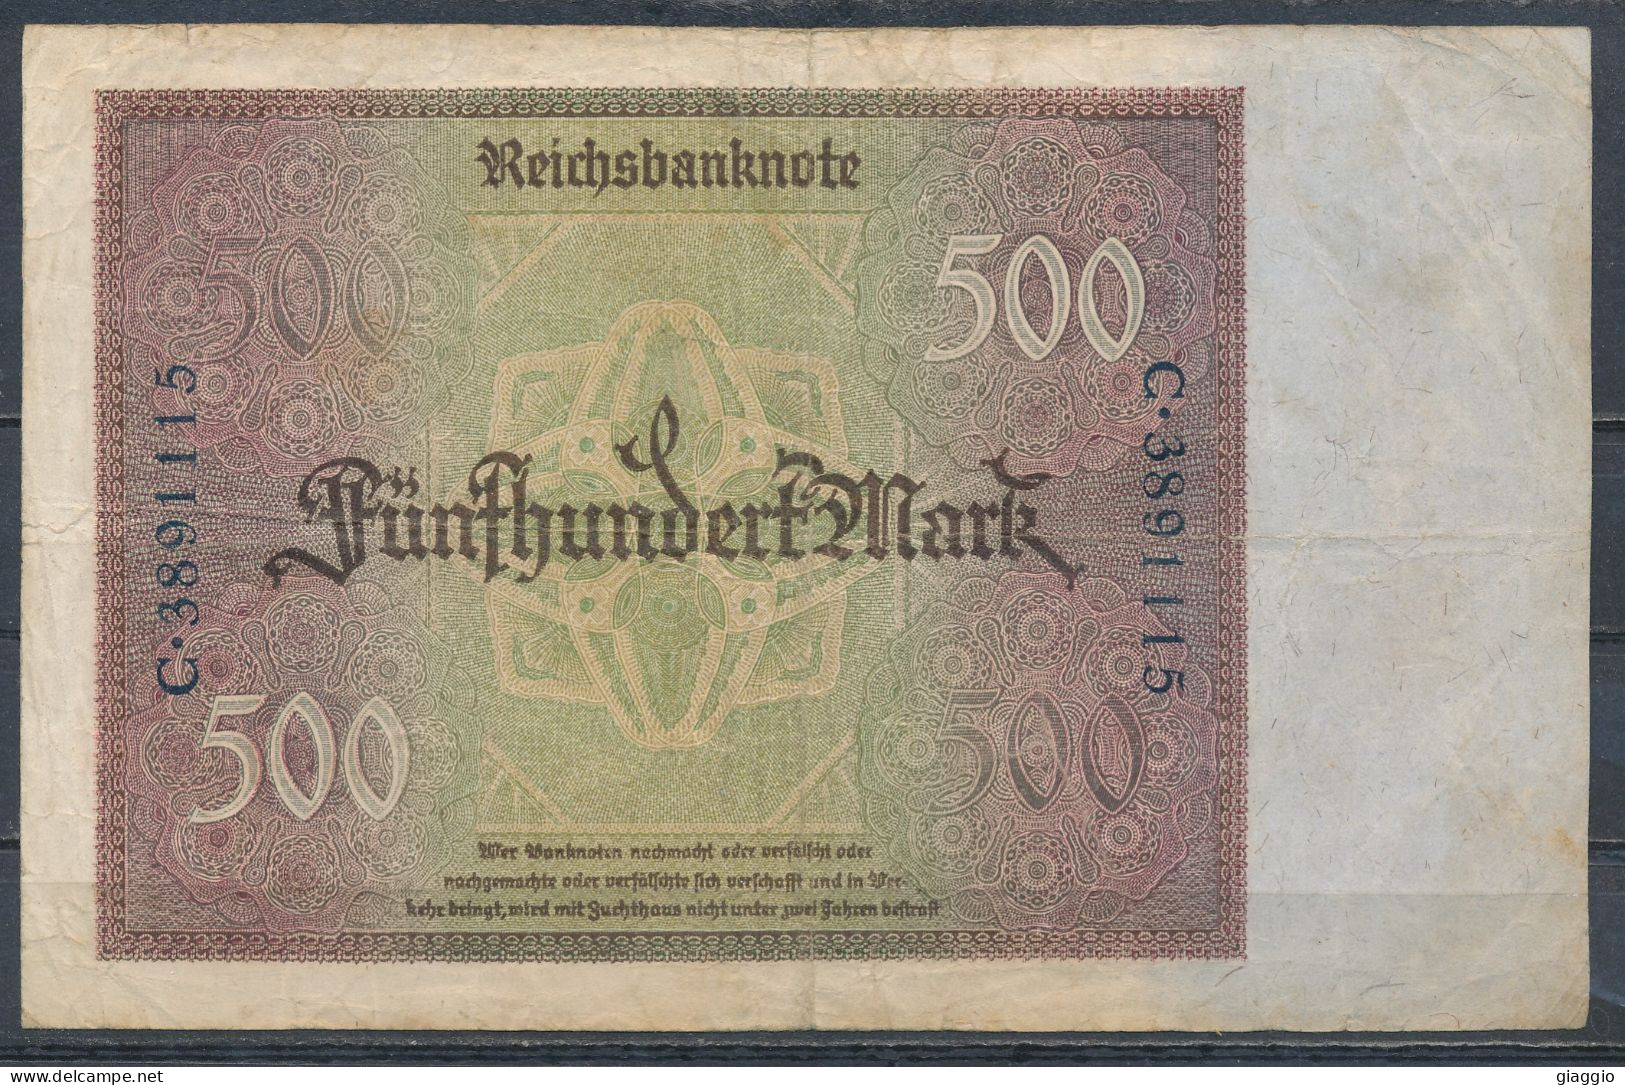 °°° GERMANY REICHSBANKNOTE 500 MARK 1922 °°° - 500 Mark